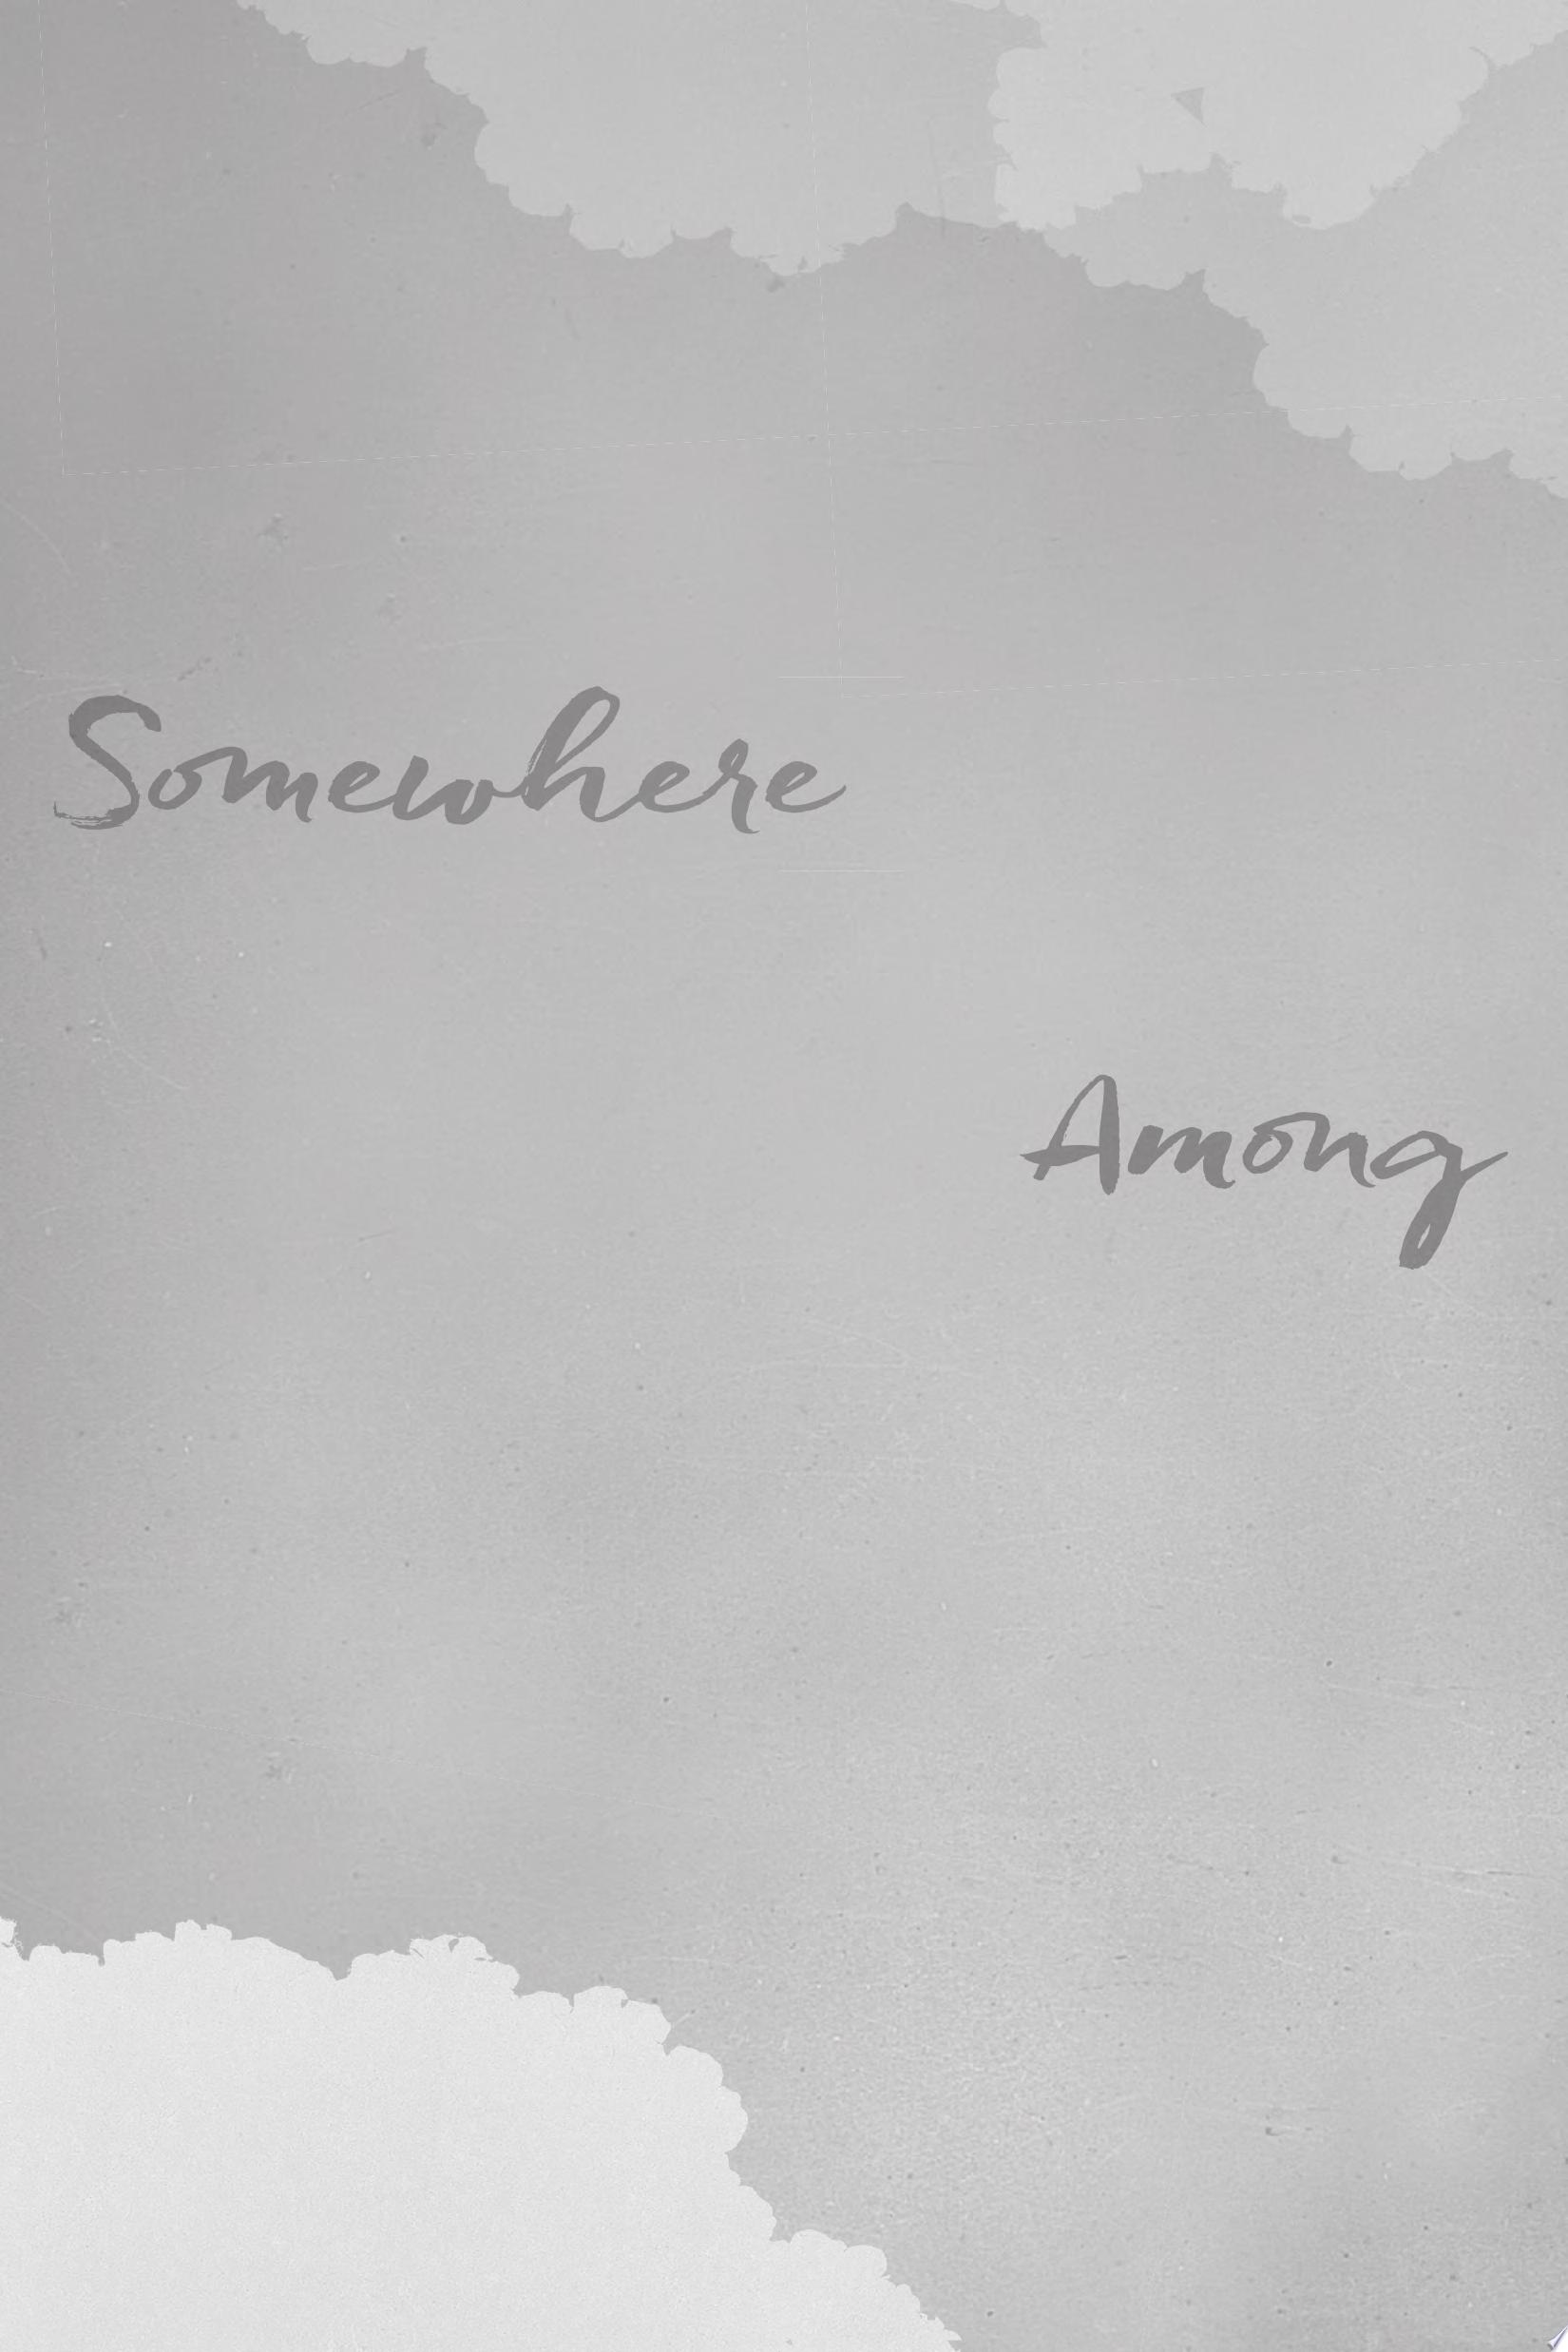 Image for "Somewhere Among"